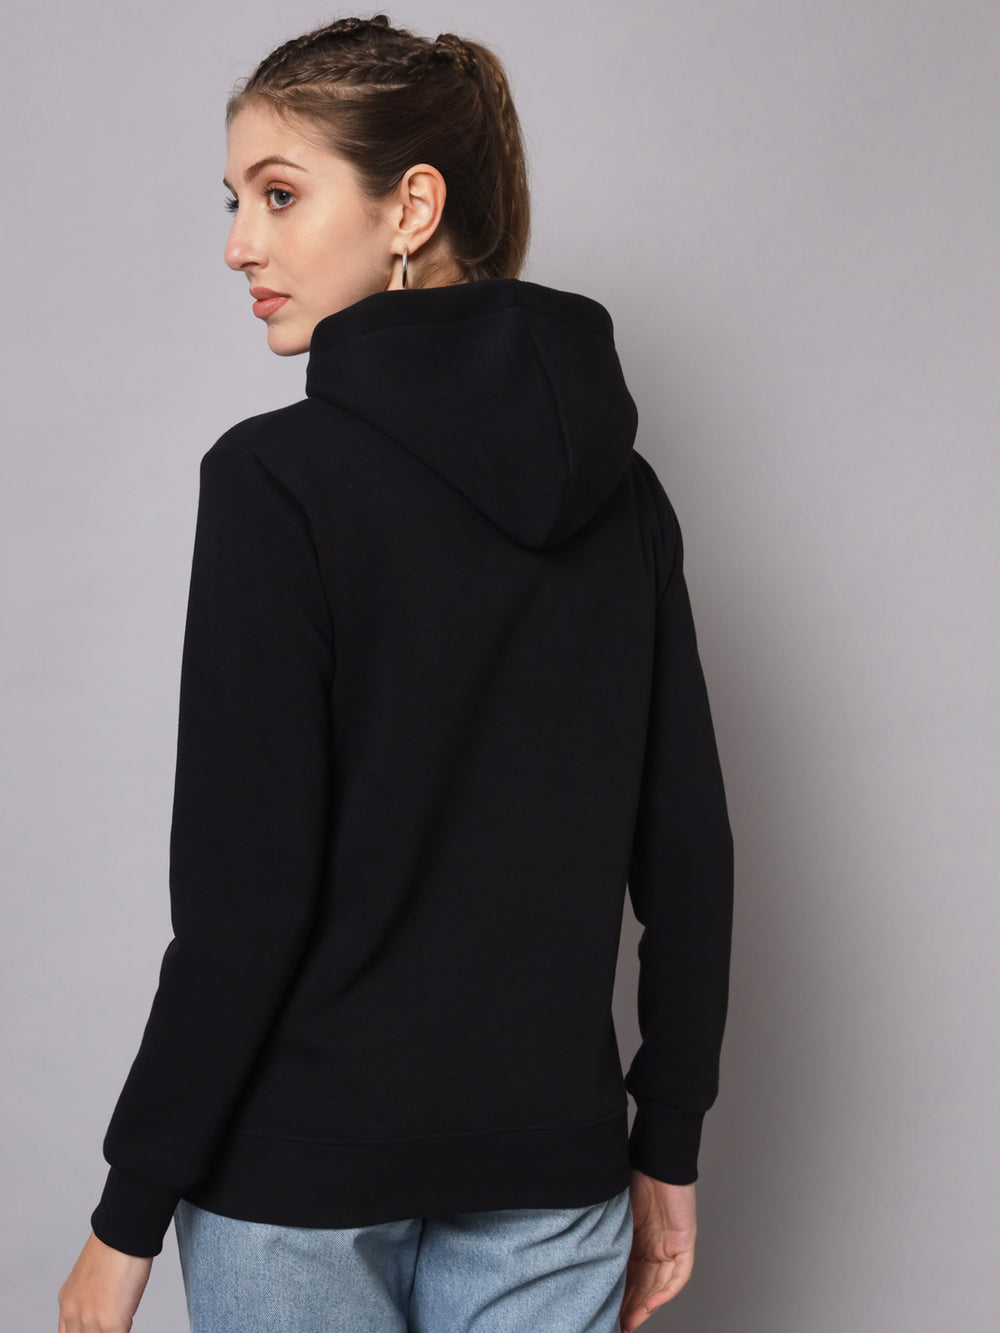 Copy of Griffel Women’s Cotton Fleece Full Sleeve Black Teddy Hoodie Sweatshirt - griffel